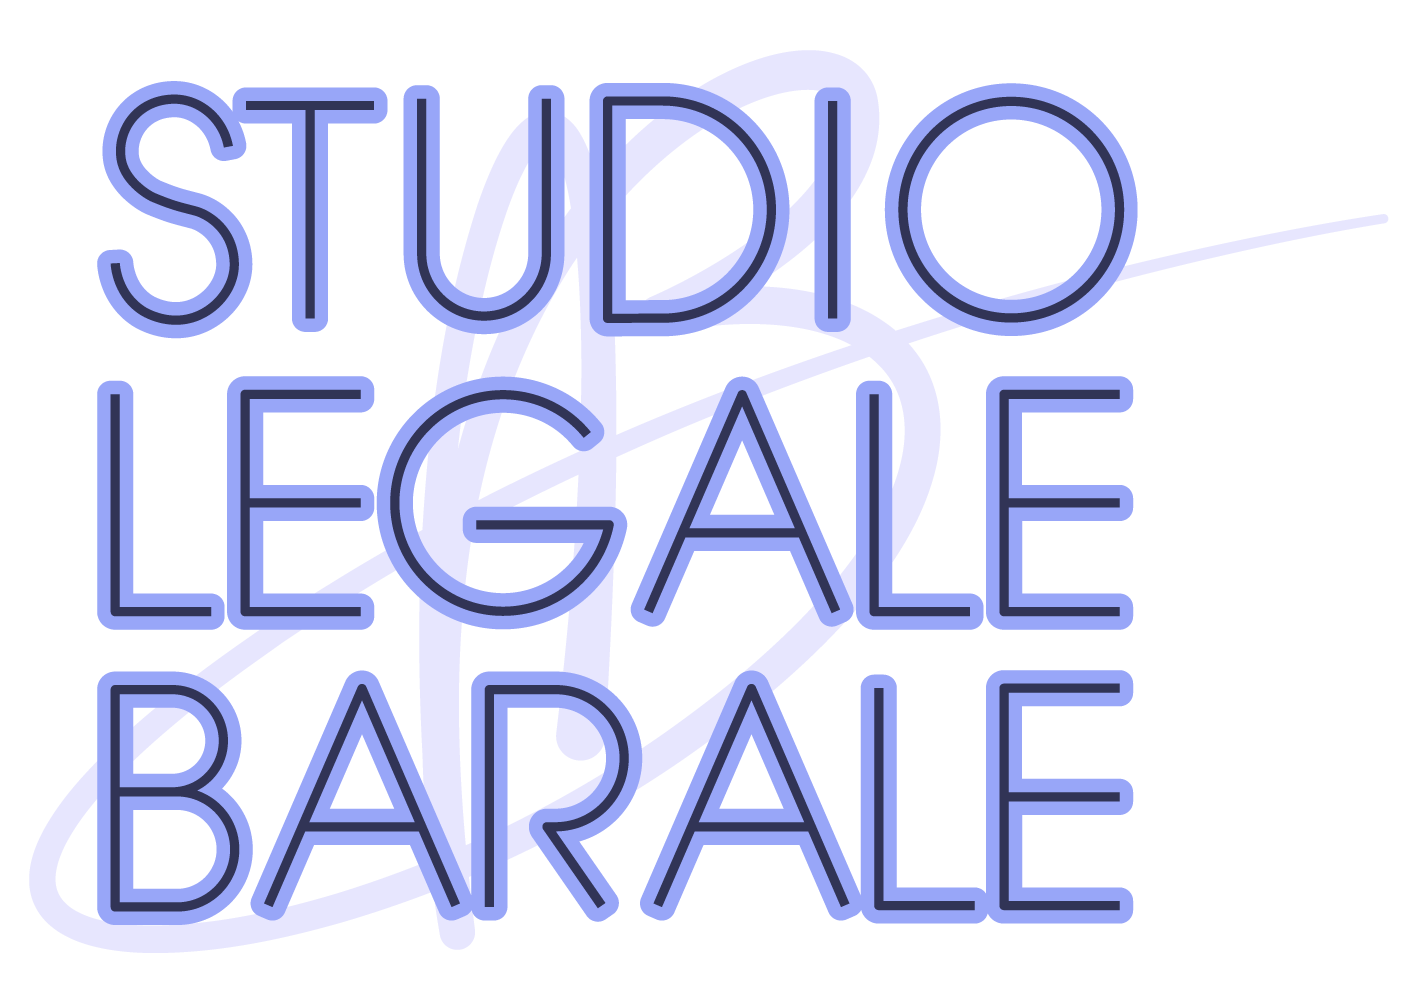 Studio Legale Barale